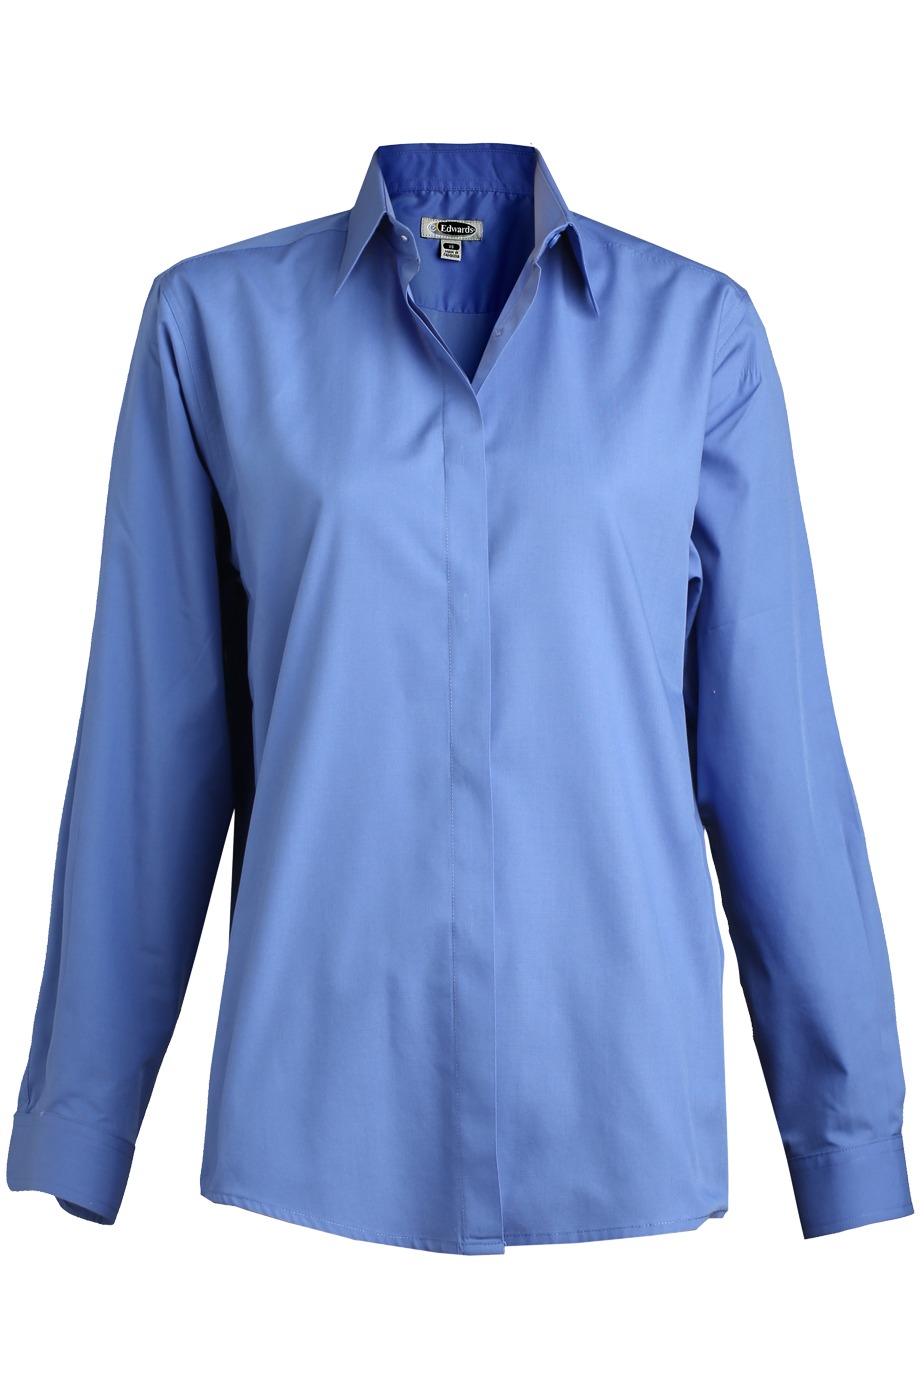 Edwards Garment 5290 - Women's Long Sleeve Cafe Shirt